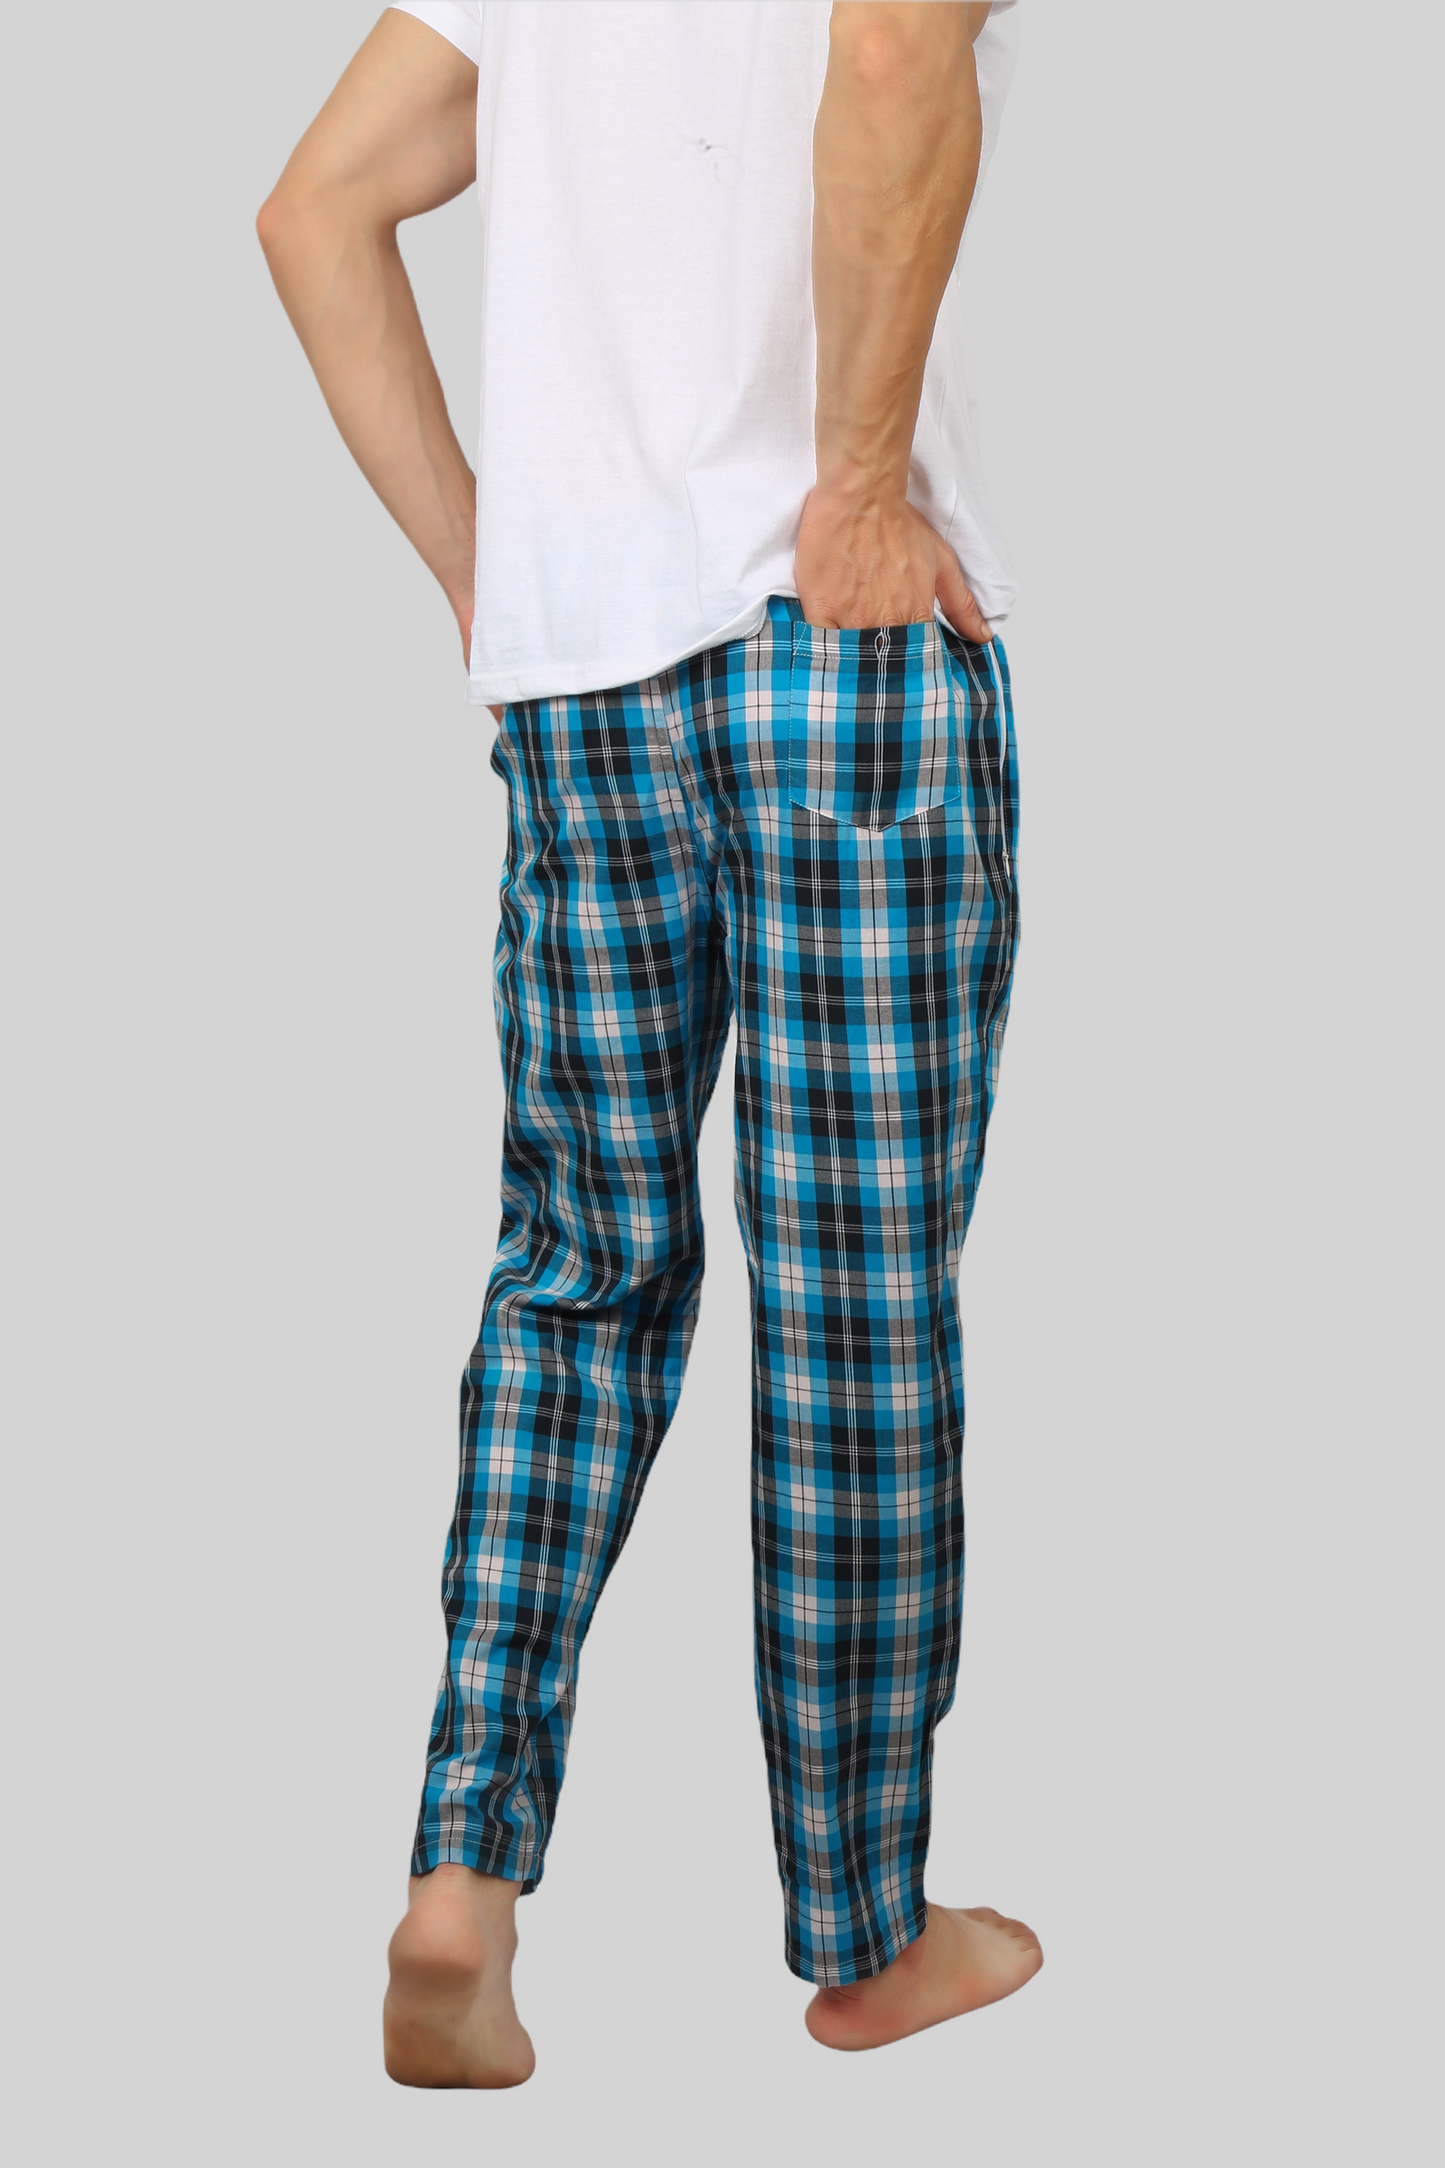 Sky Blue soft and super comfortable checkered pajamas for men